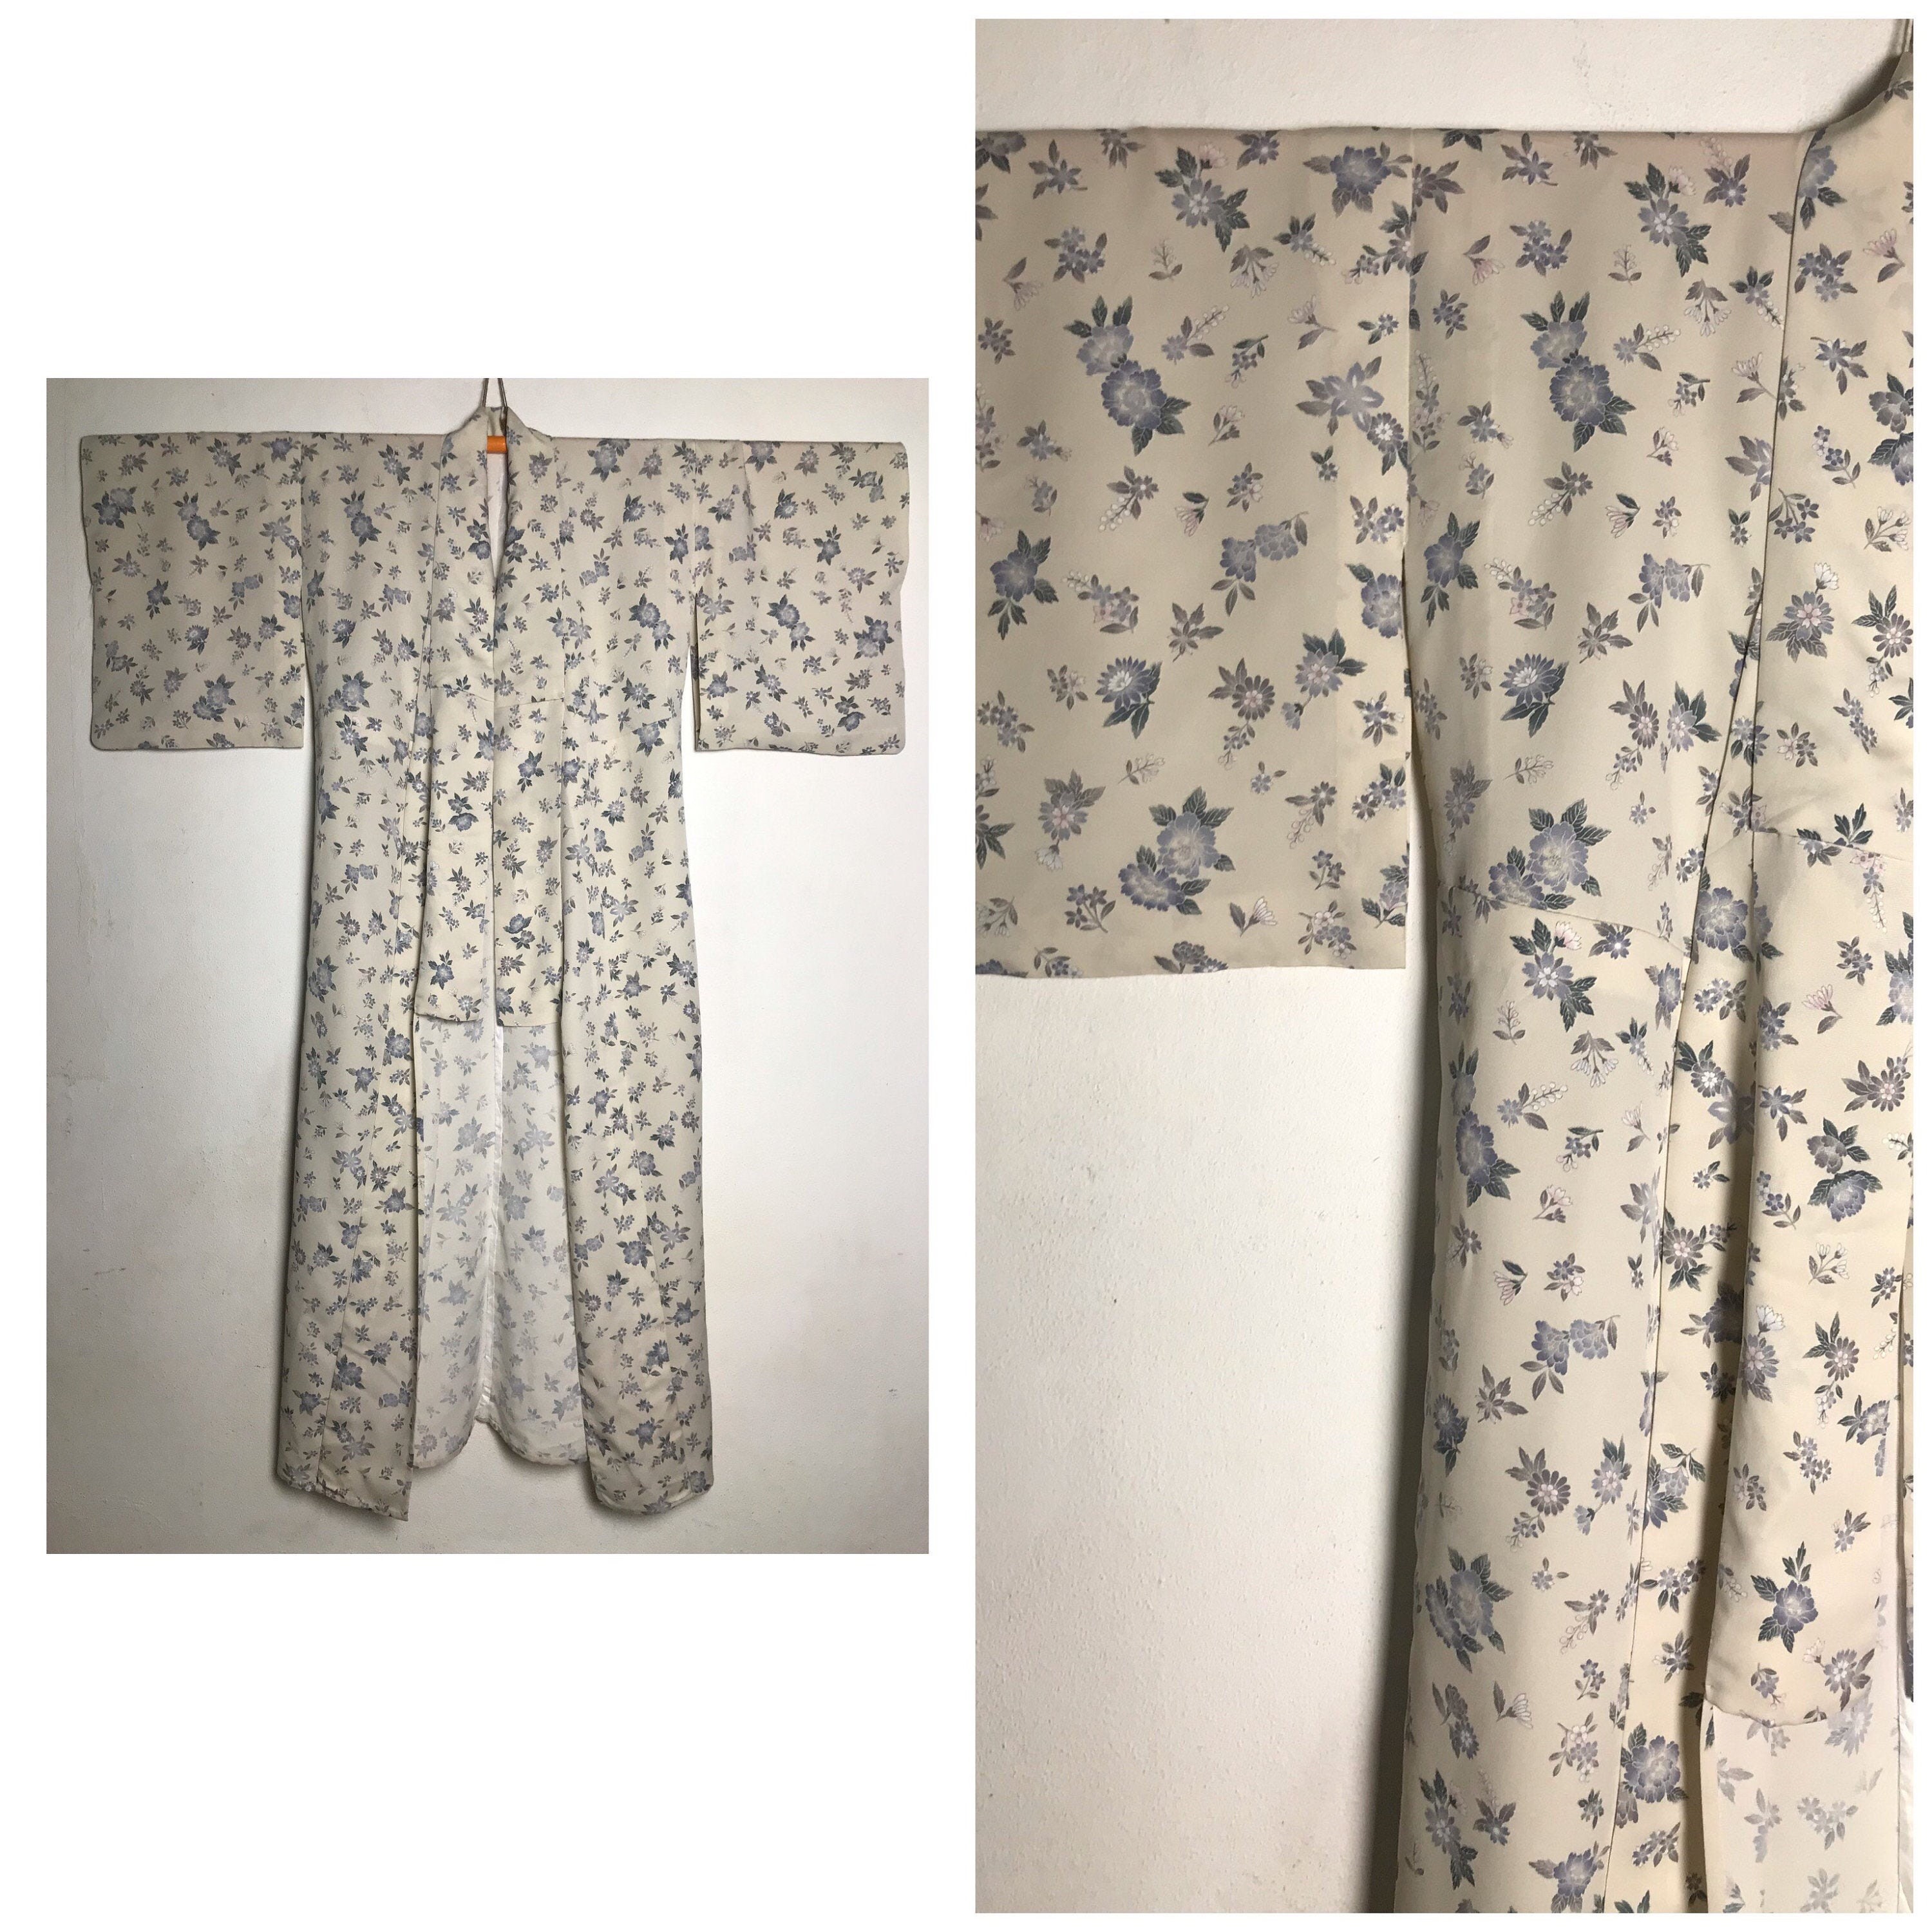 Authentic vintage japanese yukata kimono in flower patterns | Etsy